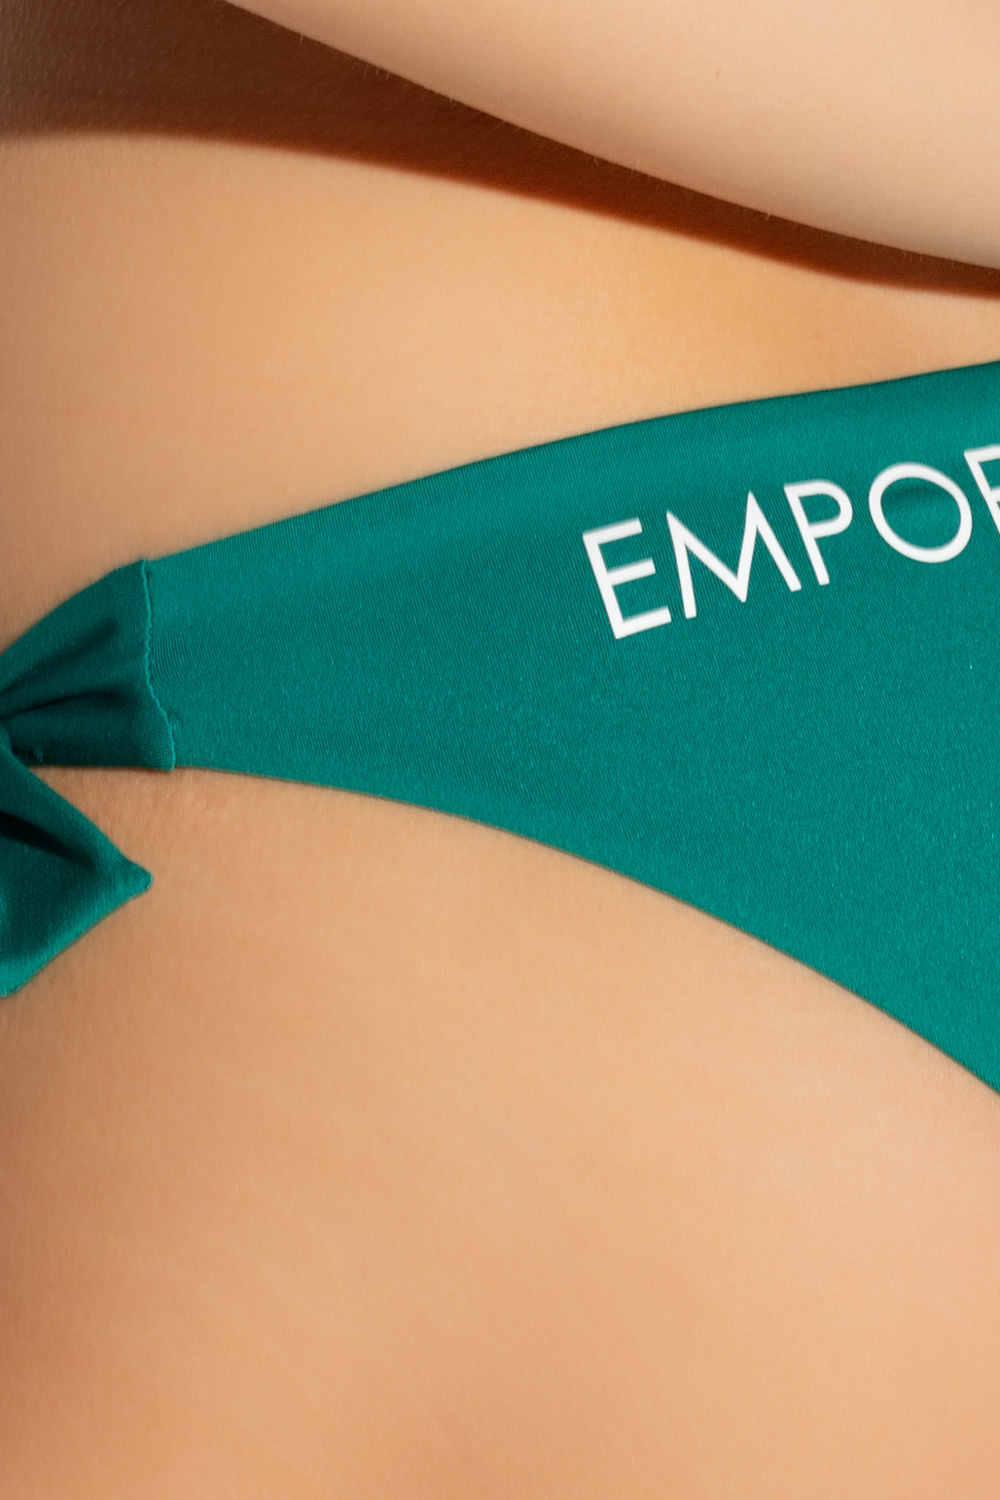 Emporio printed armani Swimsuit bottom